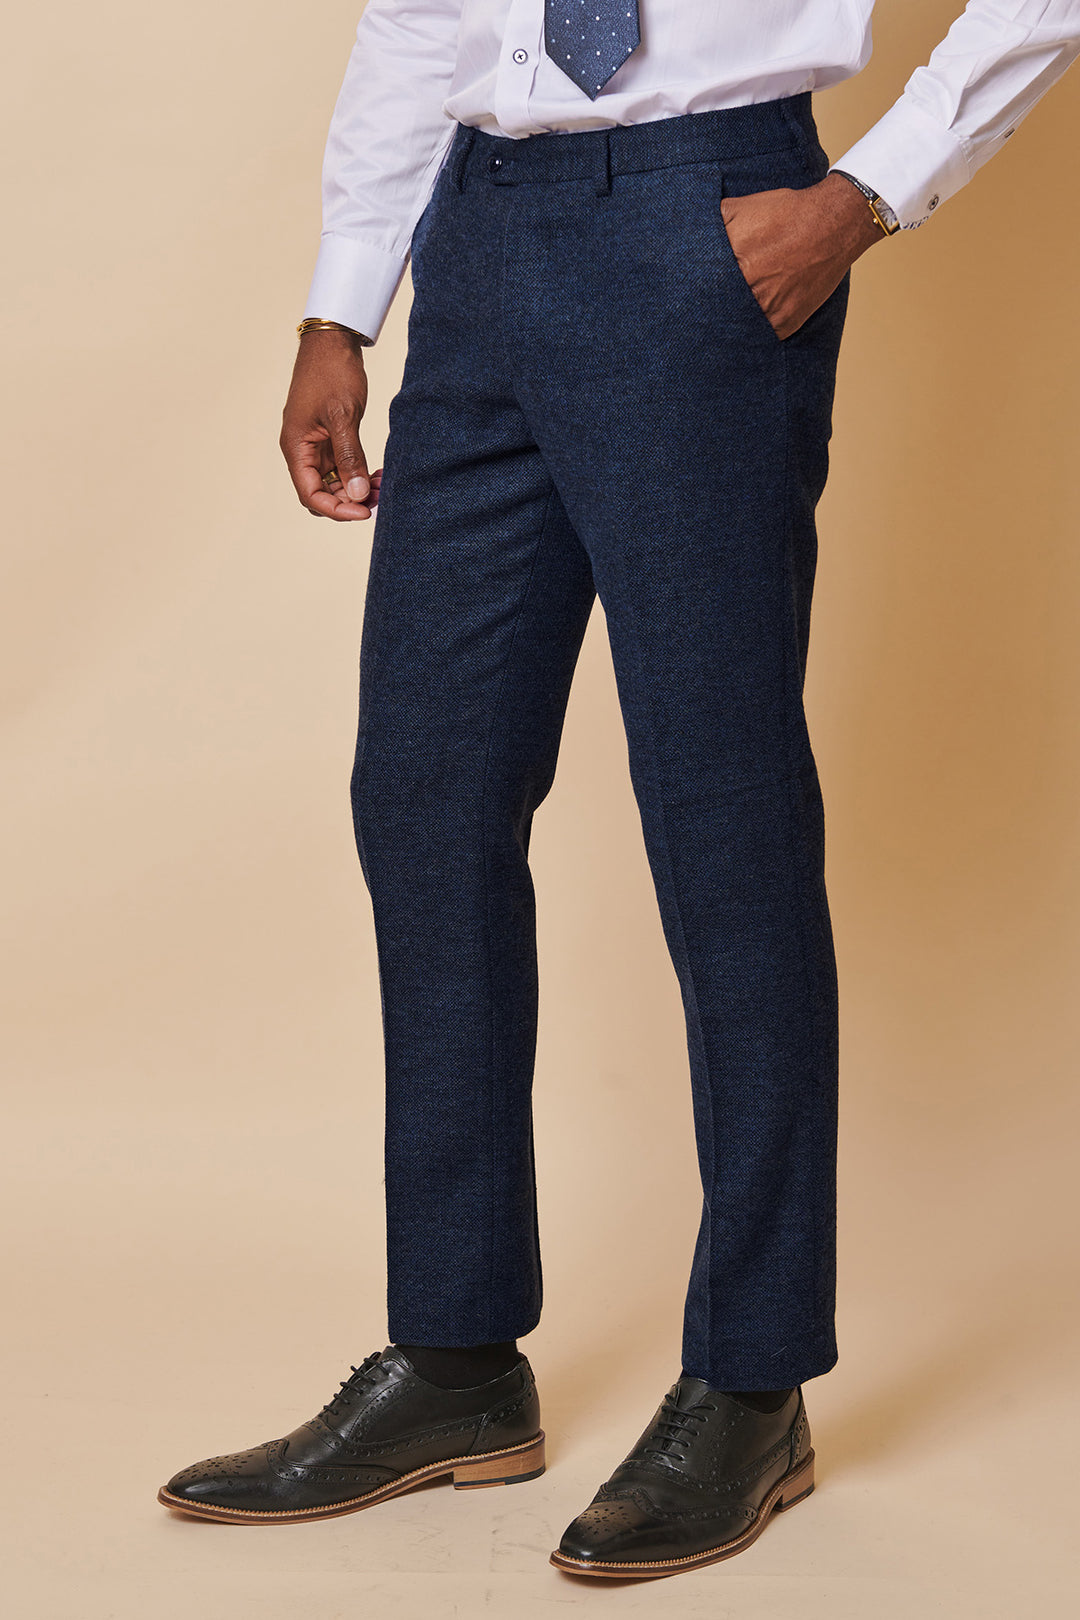 MARLOW - Navy Tweed Three Piece Suit